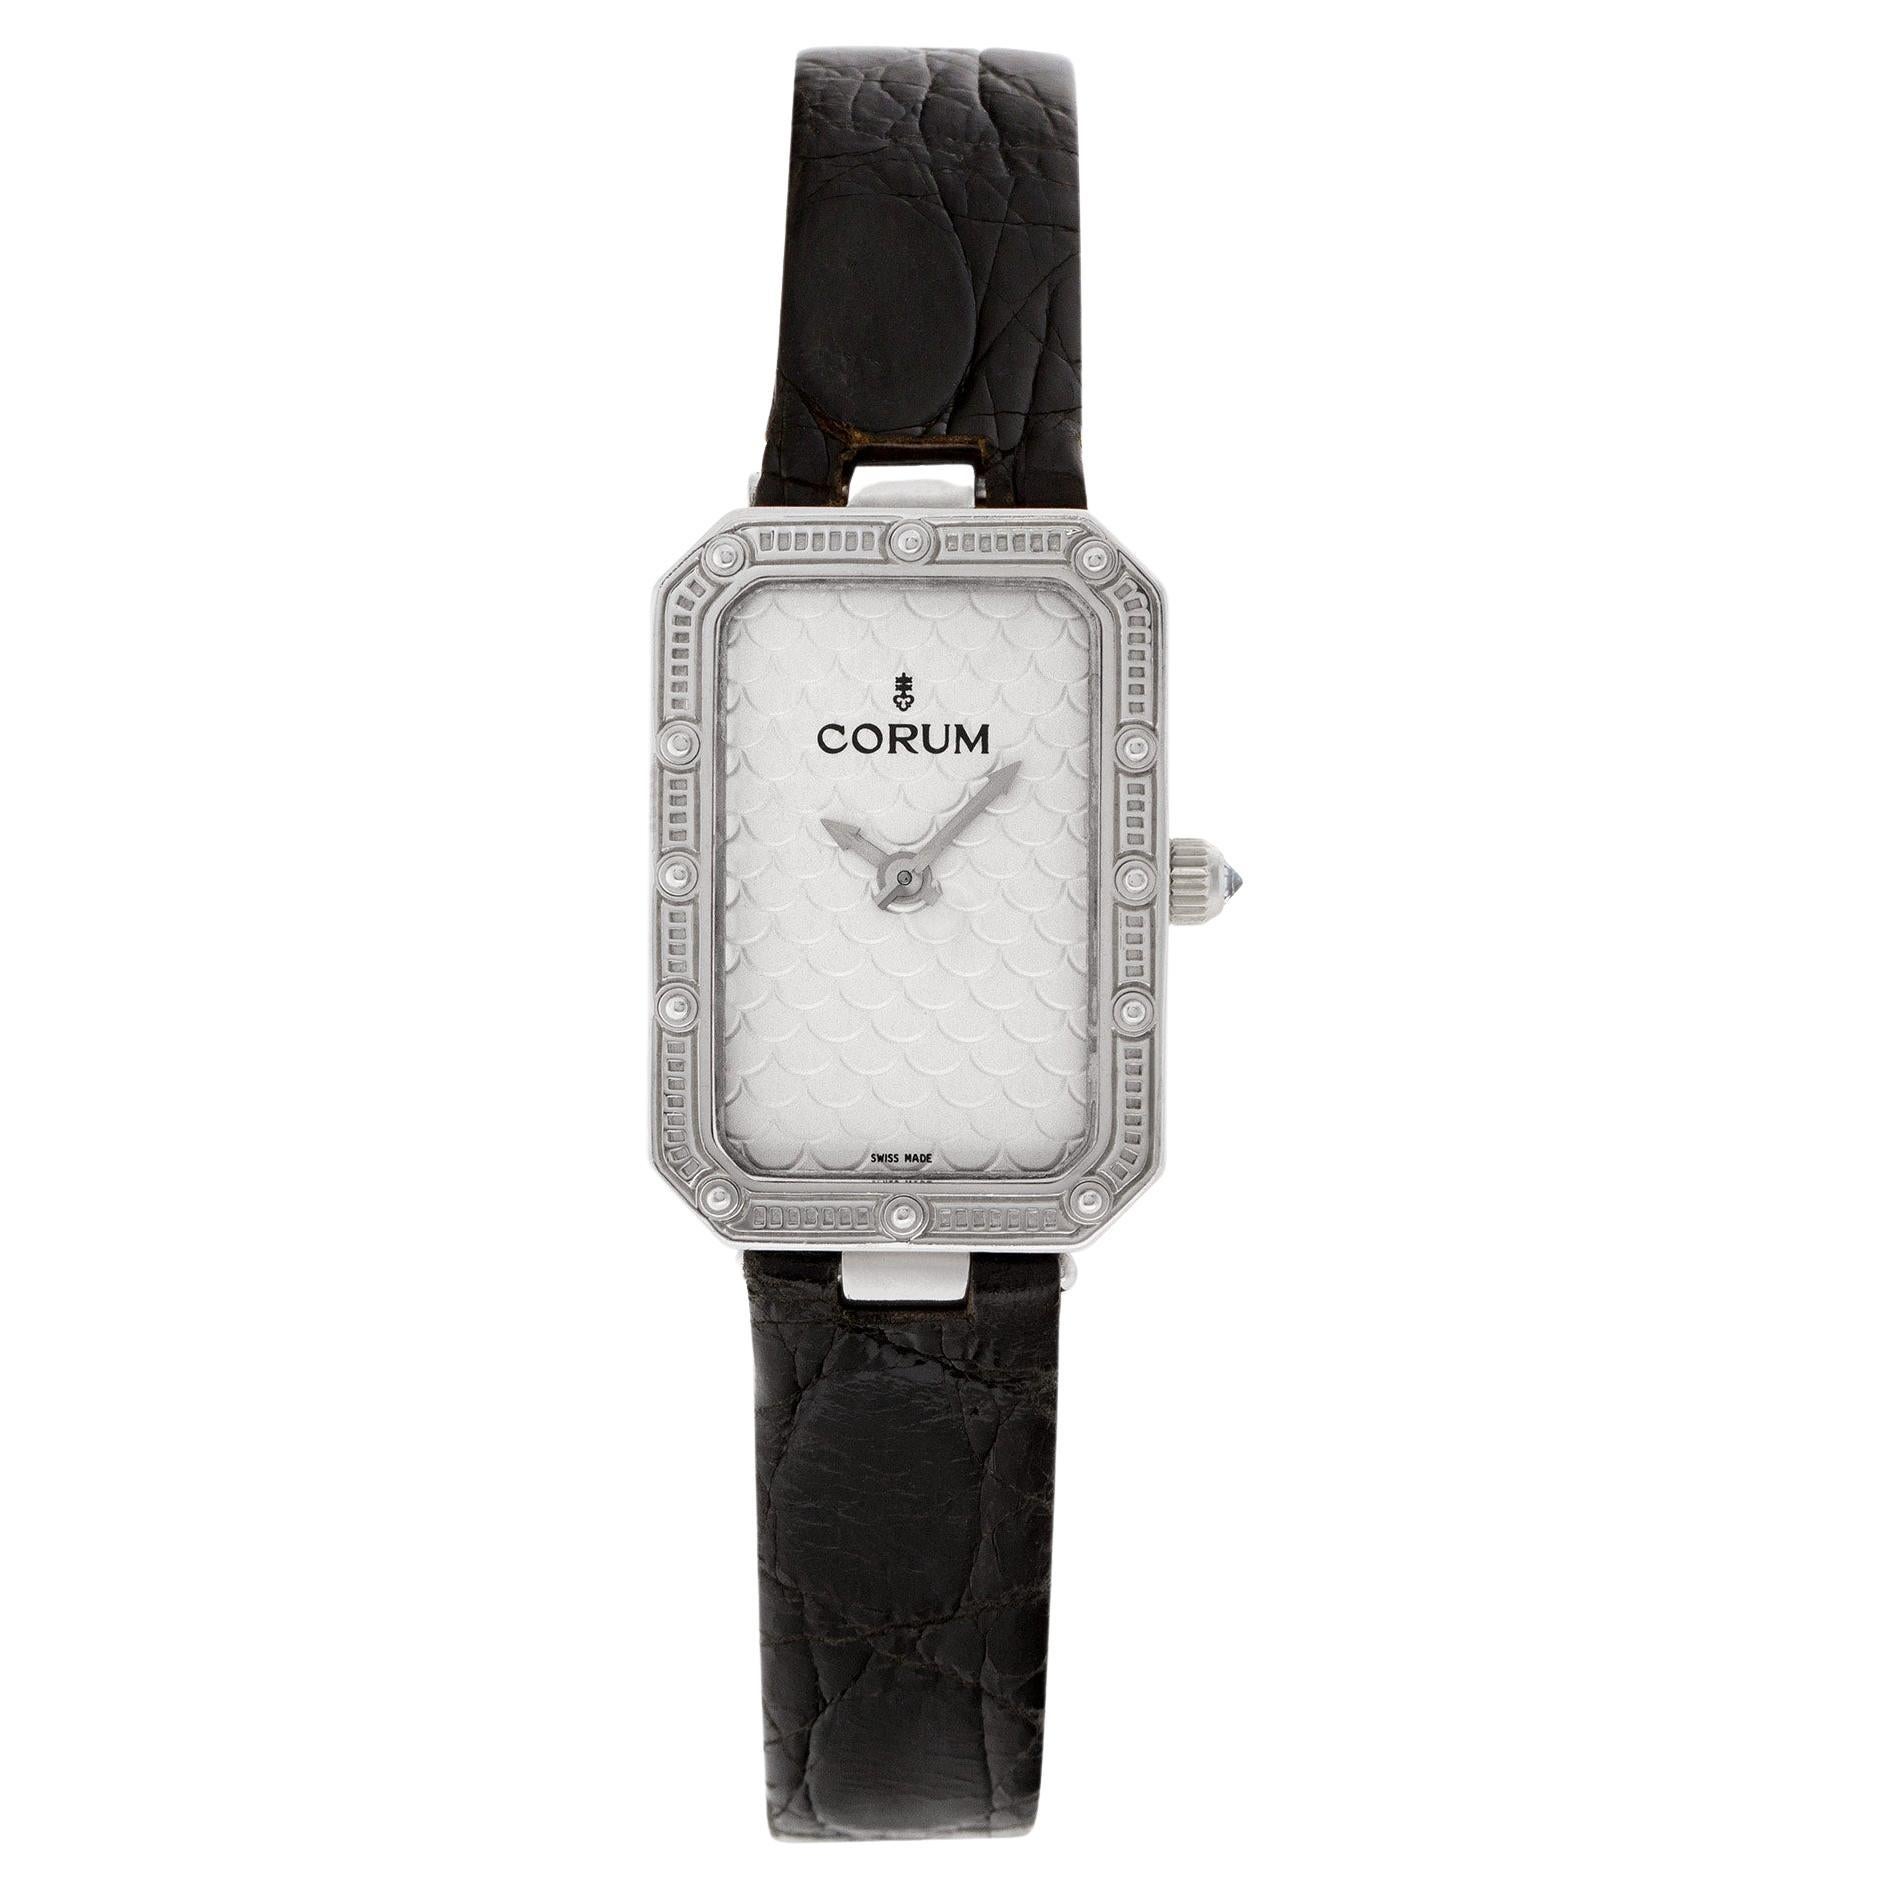 Corum 24 706 59 18k White Gold Silver Dial Quartz Watch For Sale